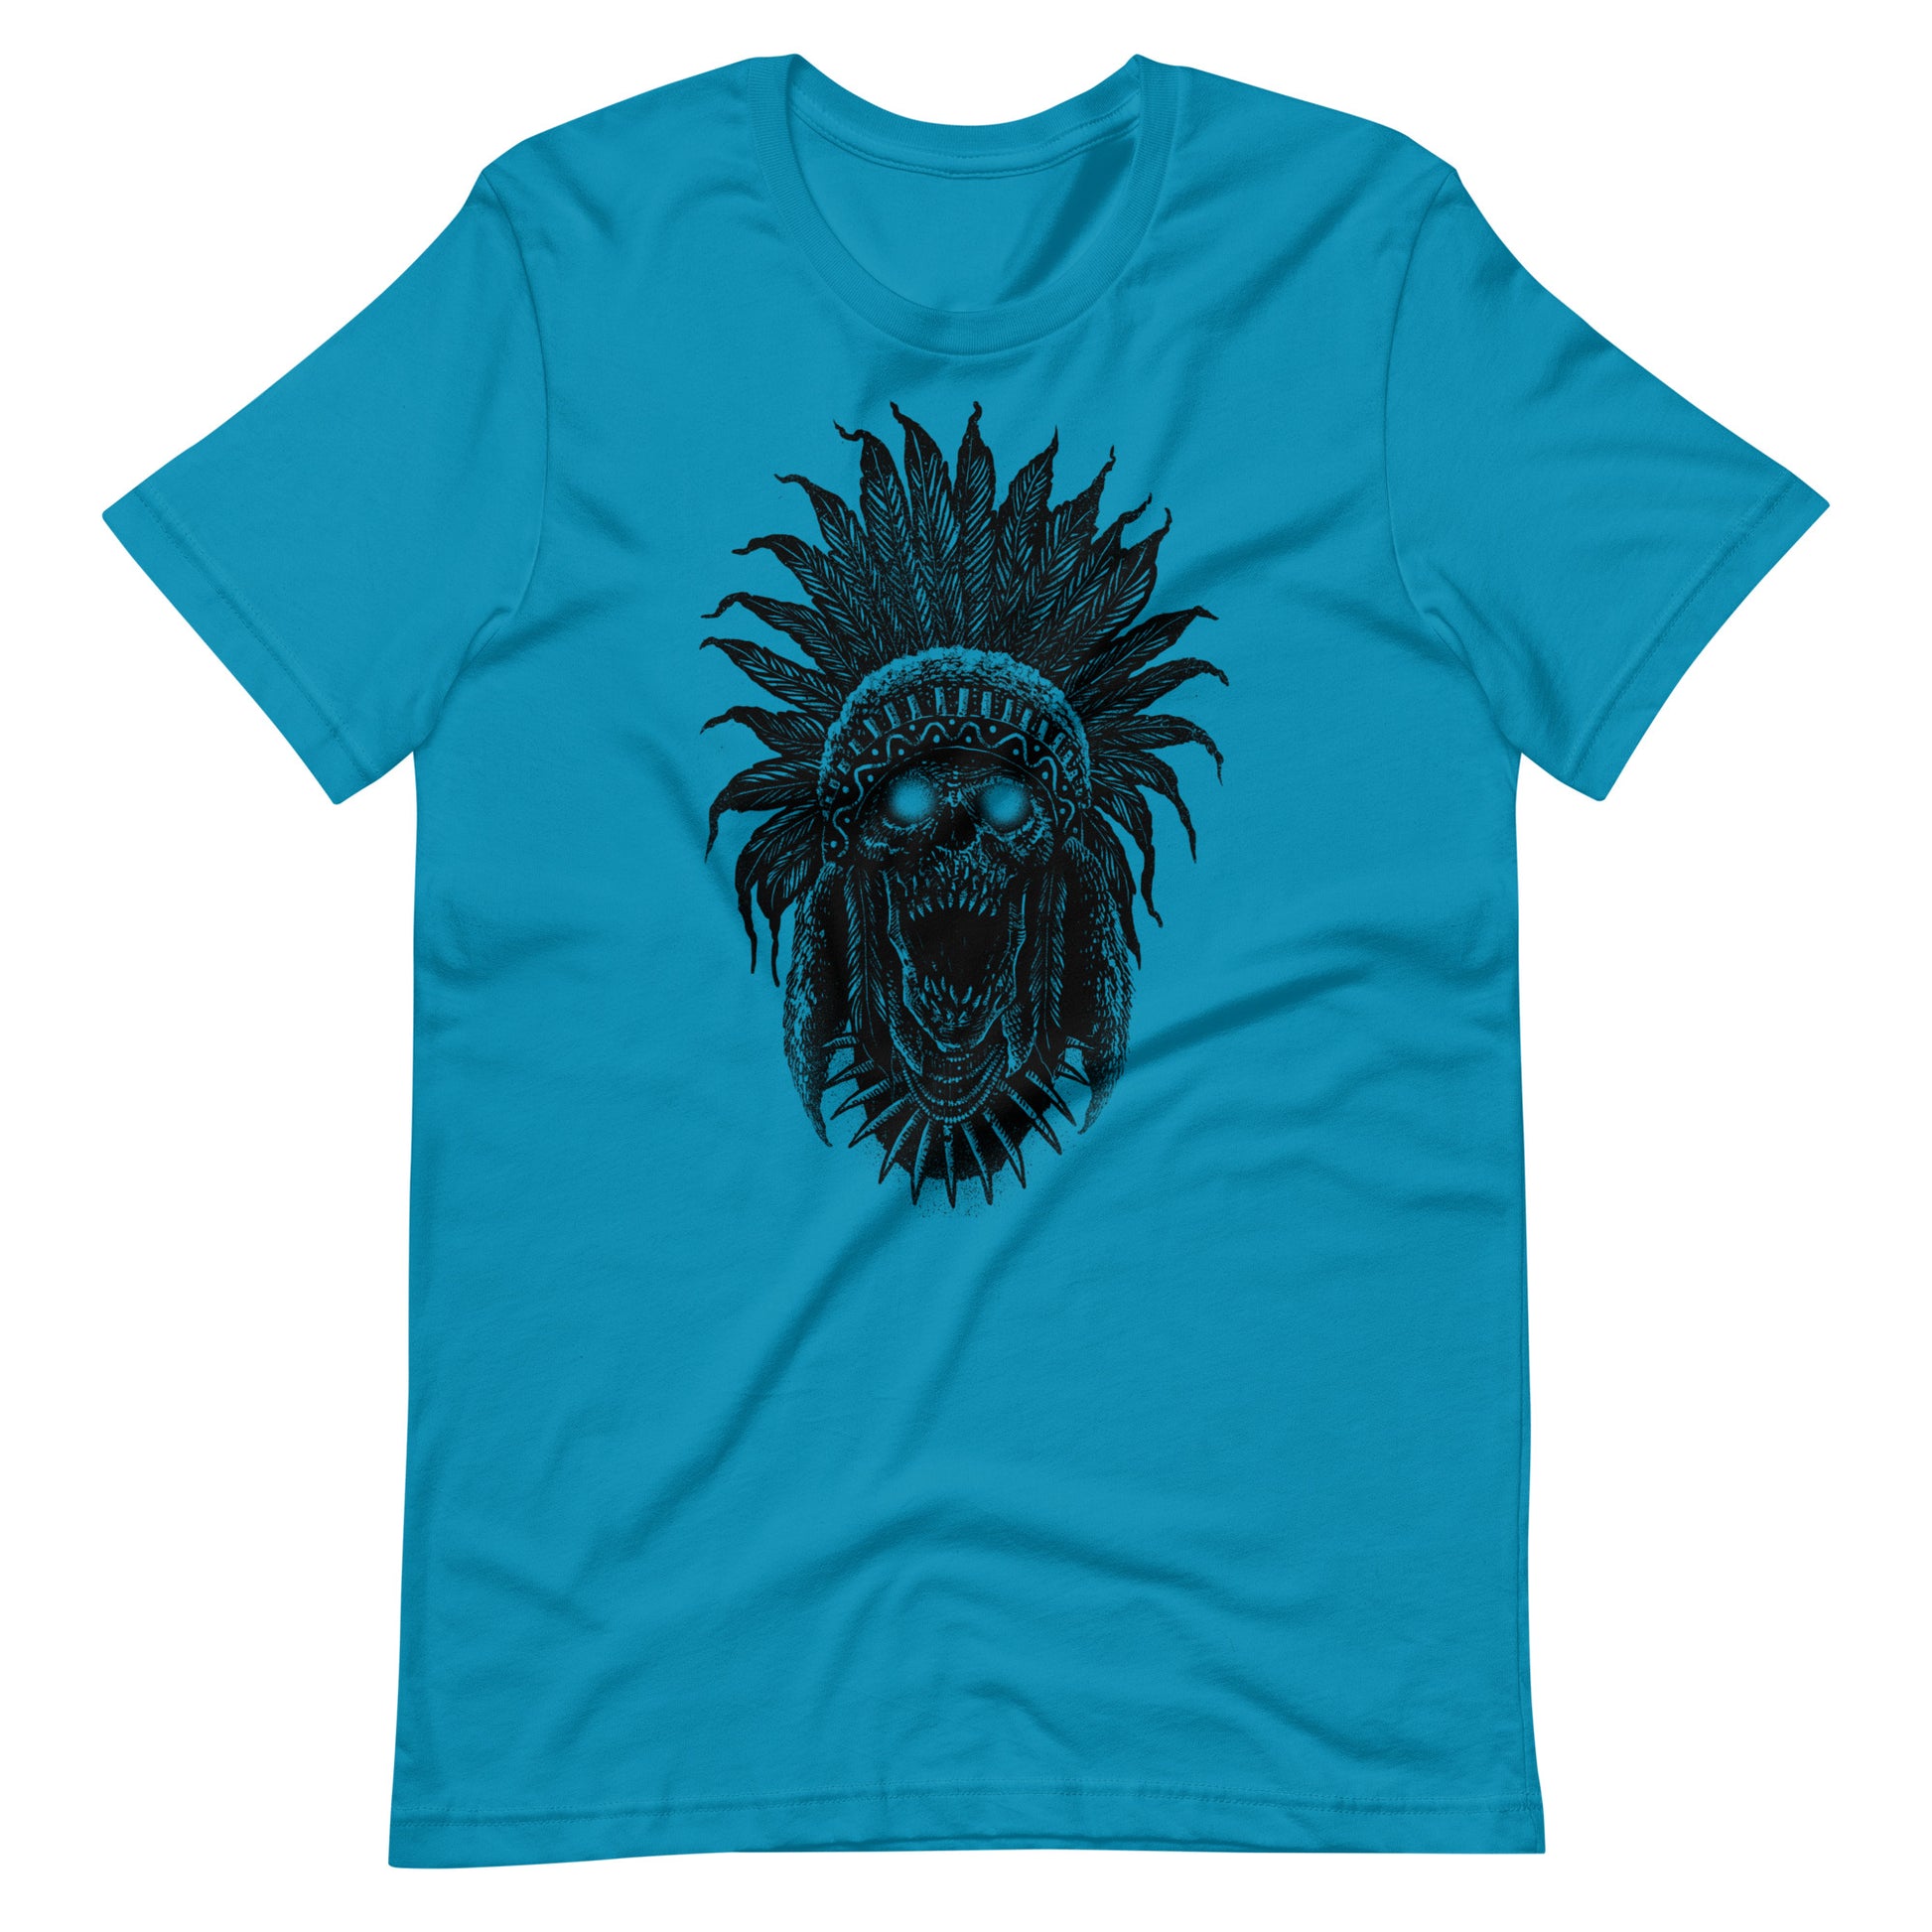 Tribe Skull Black - Men's t-shirt - Aqua Front